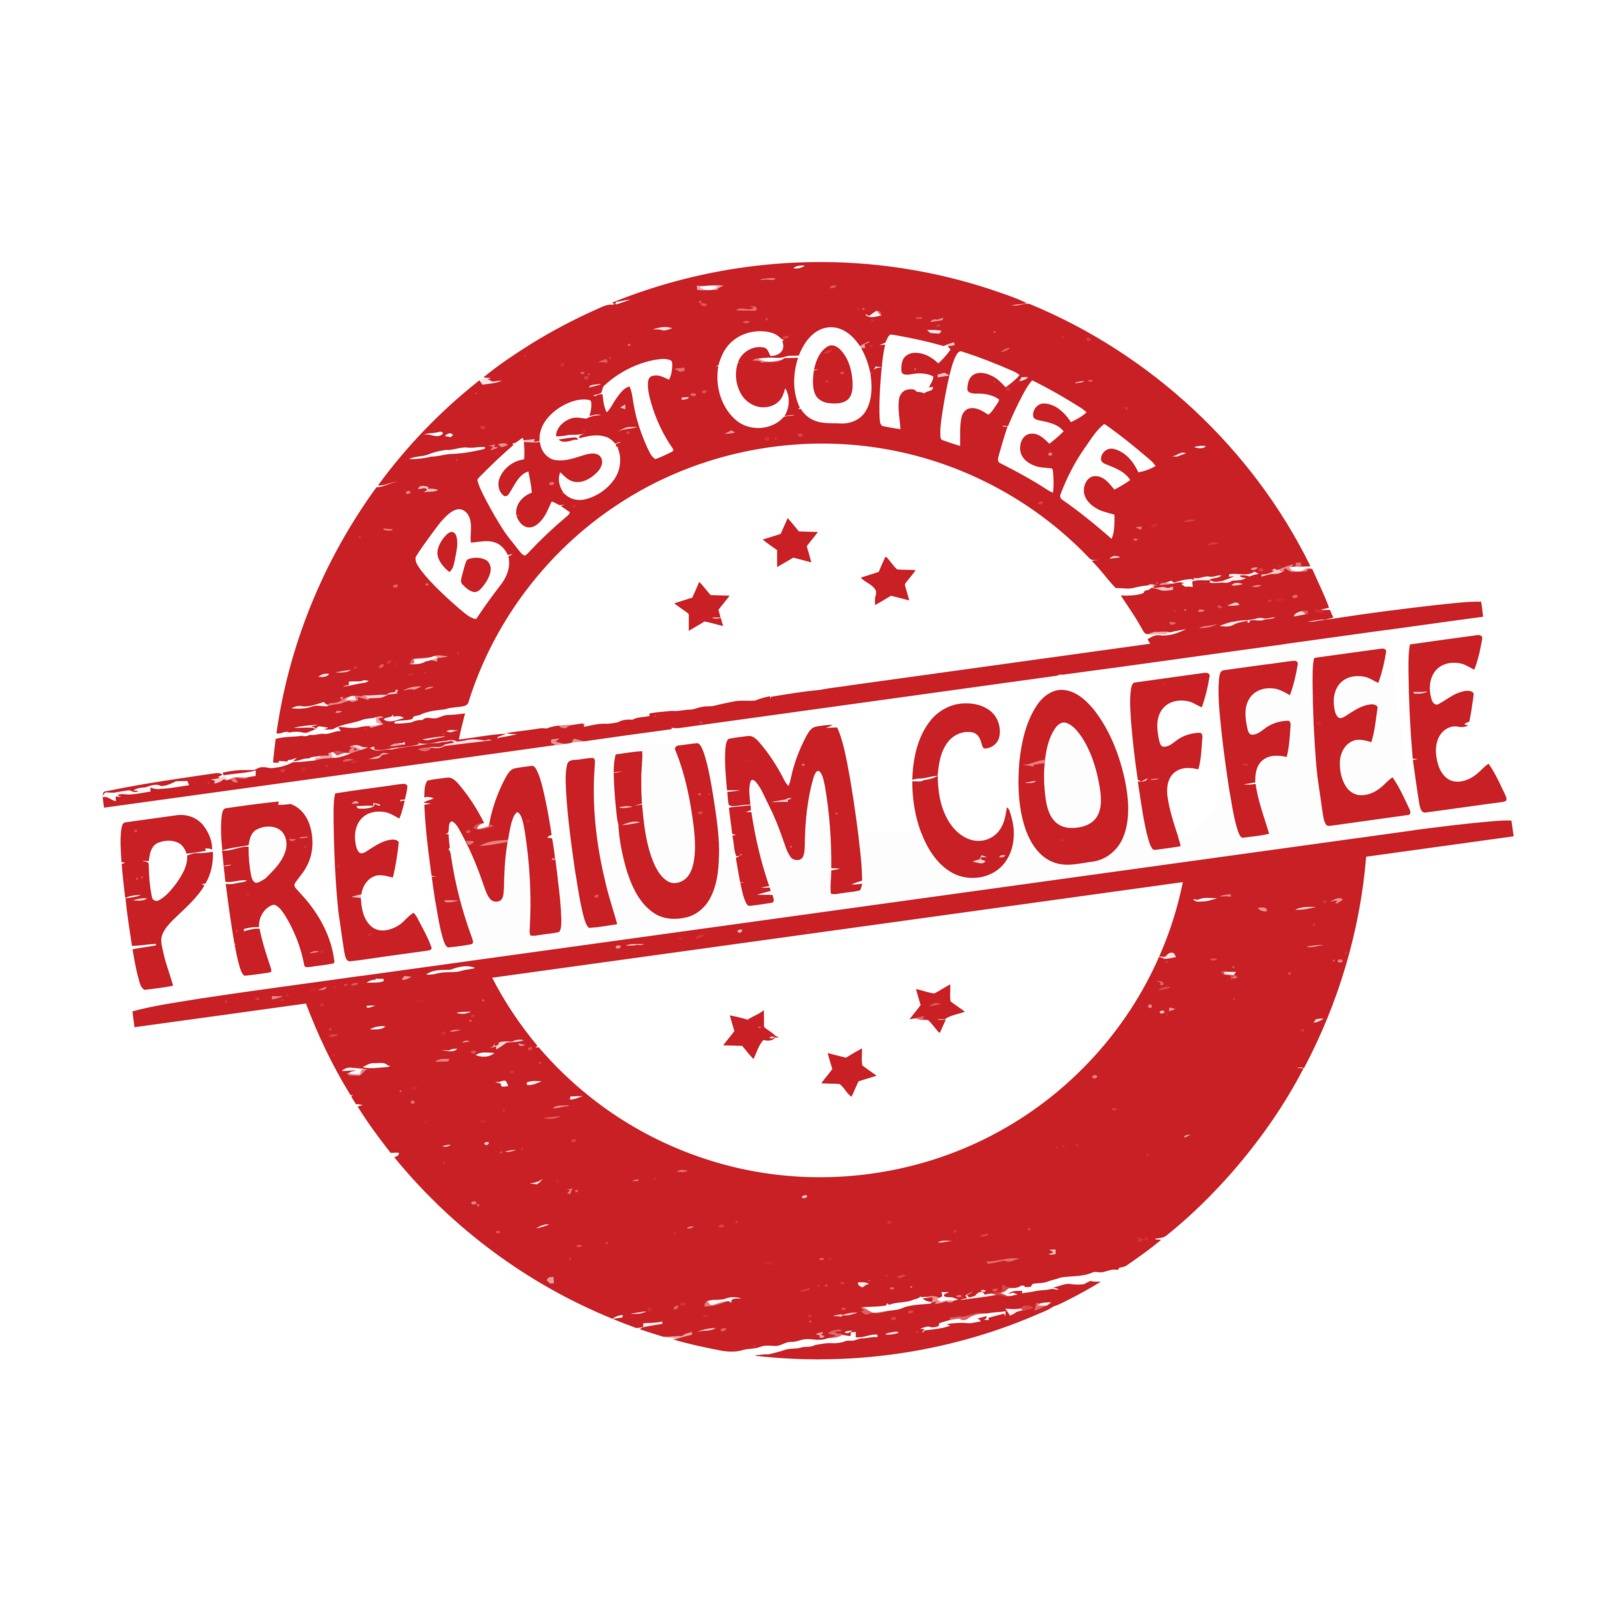 Premium coffee by carmenbobo